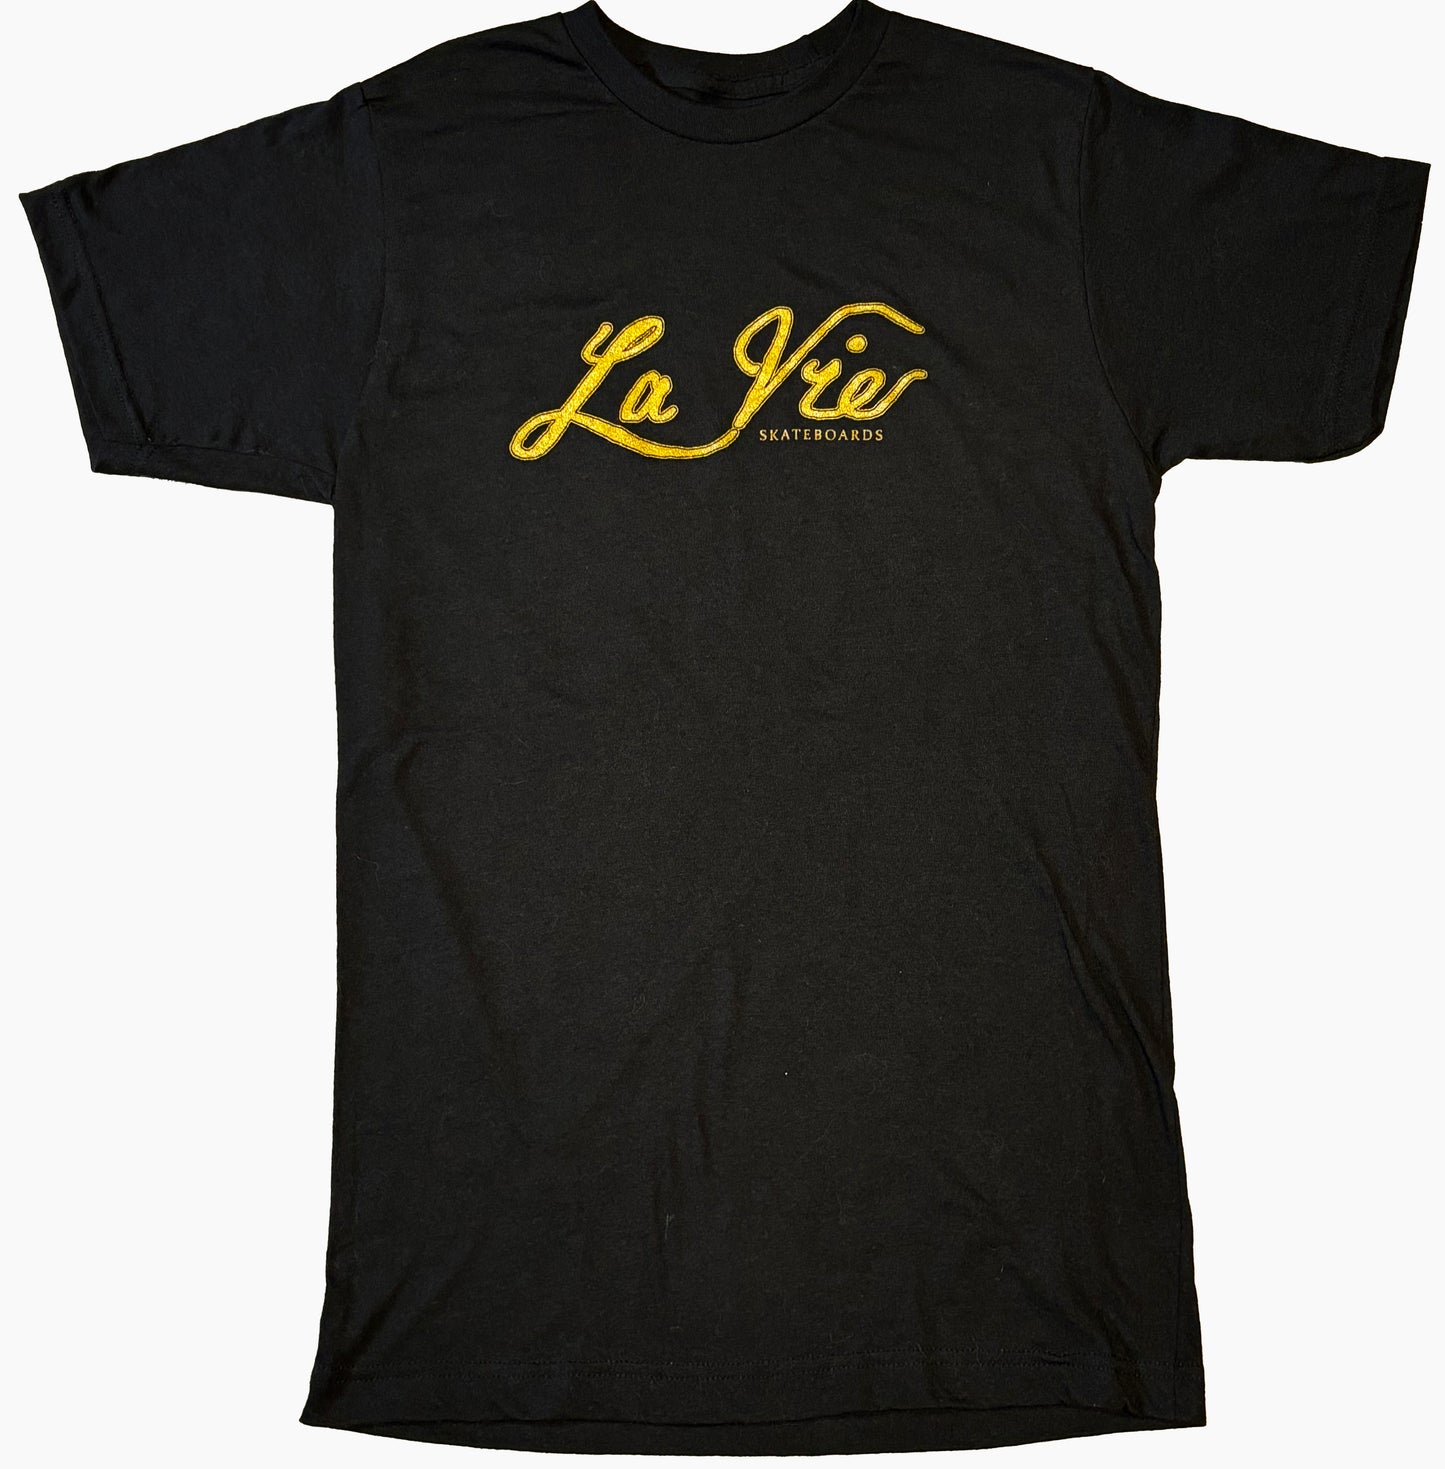 LVS short sleeve t-shirt black/gold script